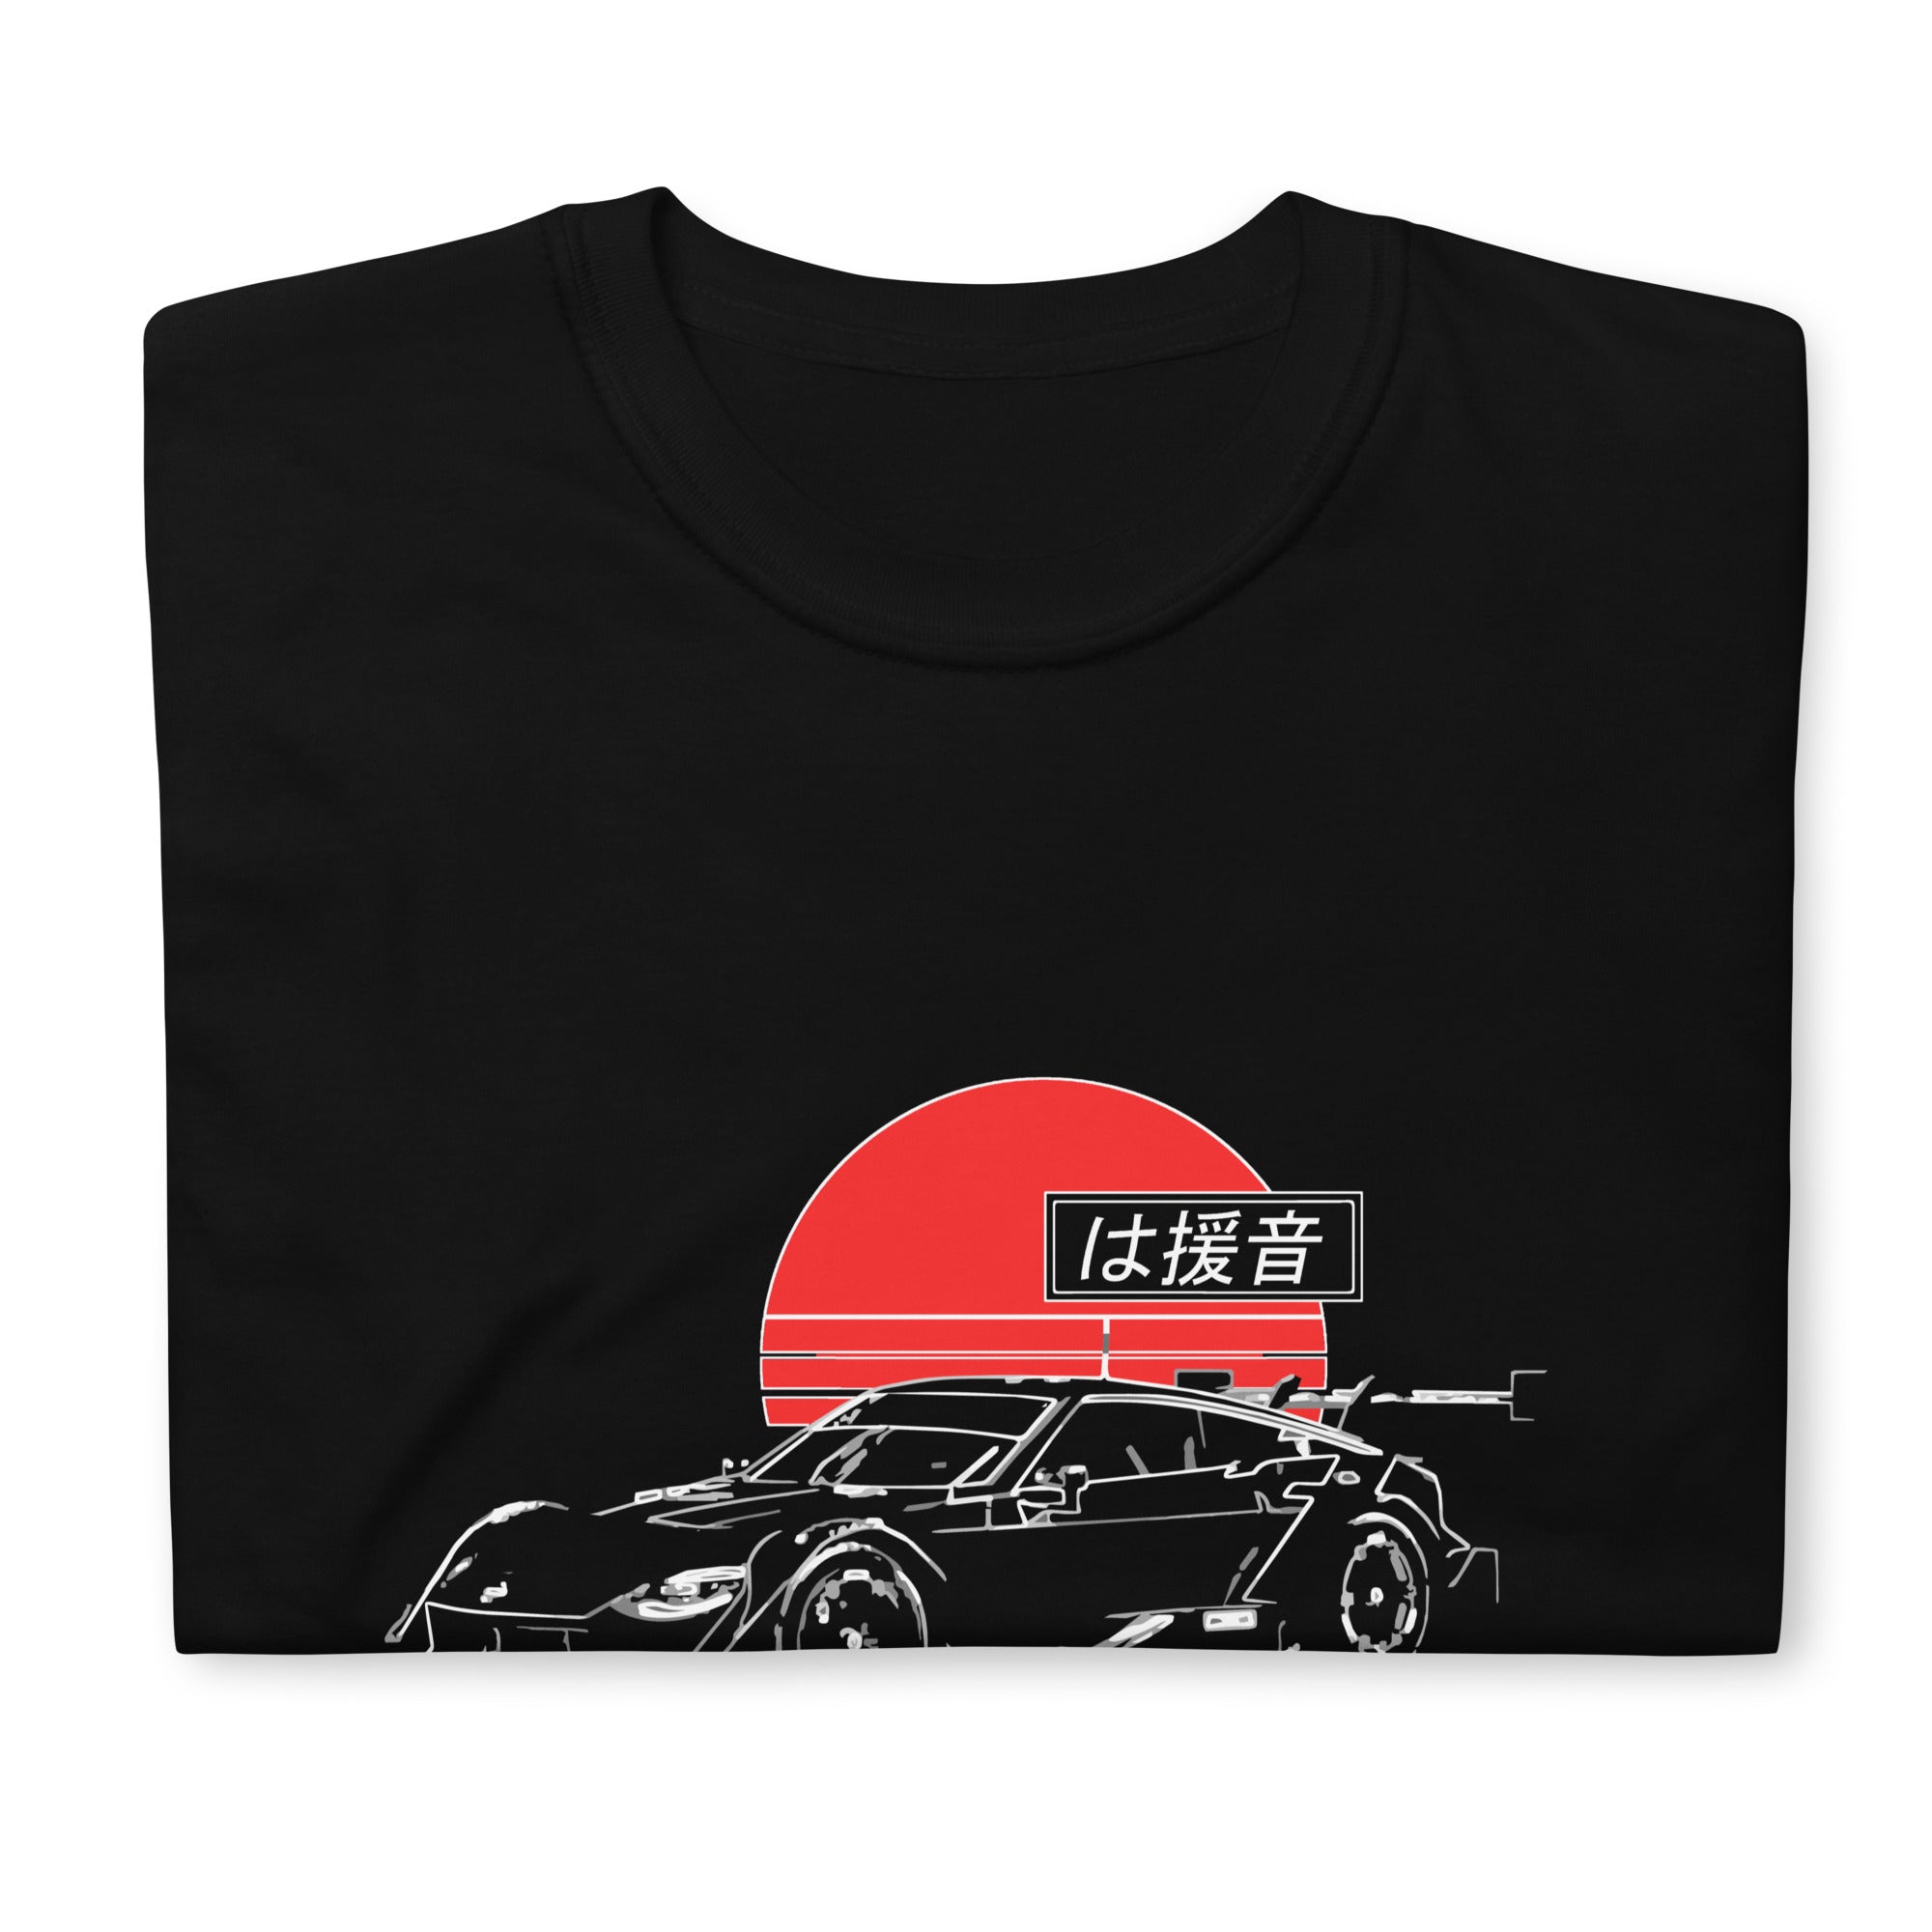 R35 GT-R Skyline Super Gt Racing Japan Red Sun JDM Short-Sleeve Unisex T-Shirt